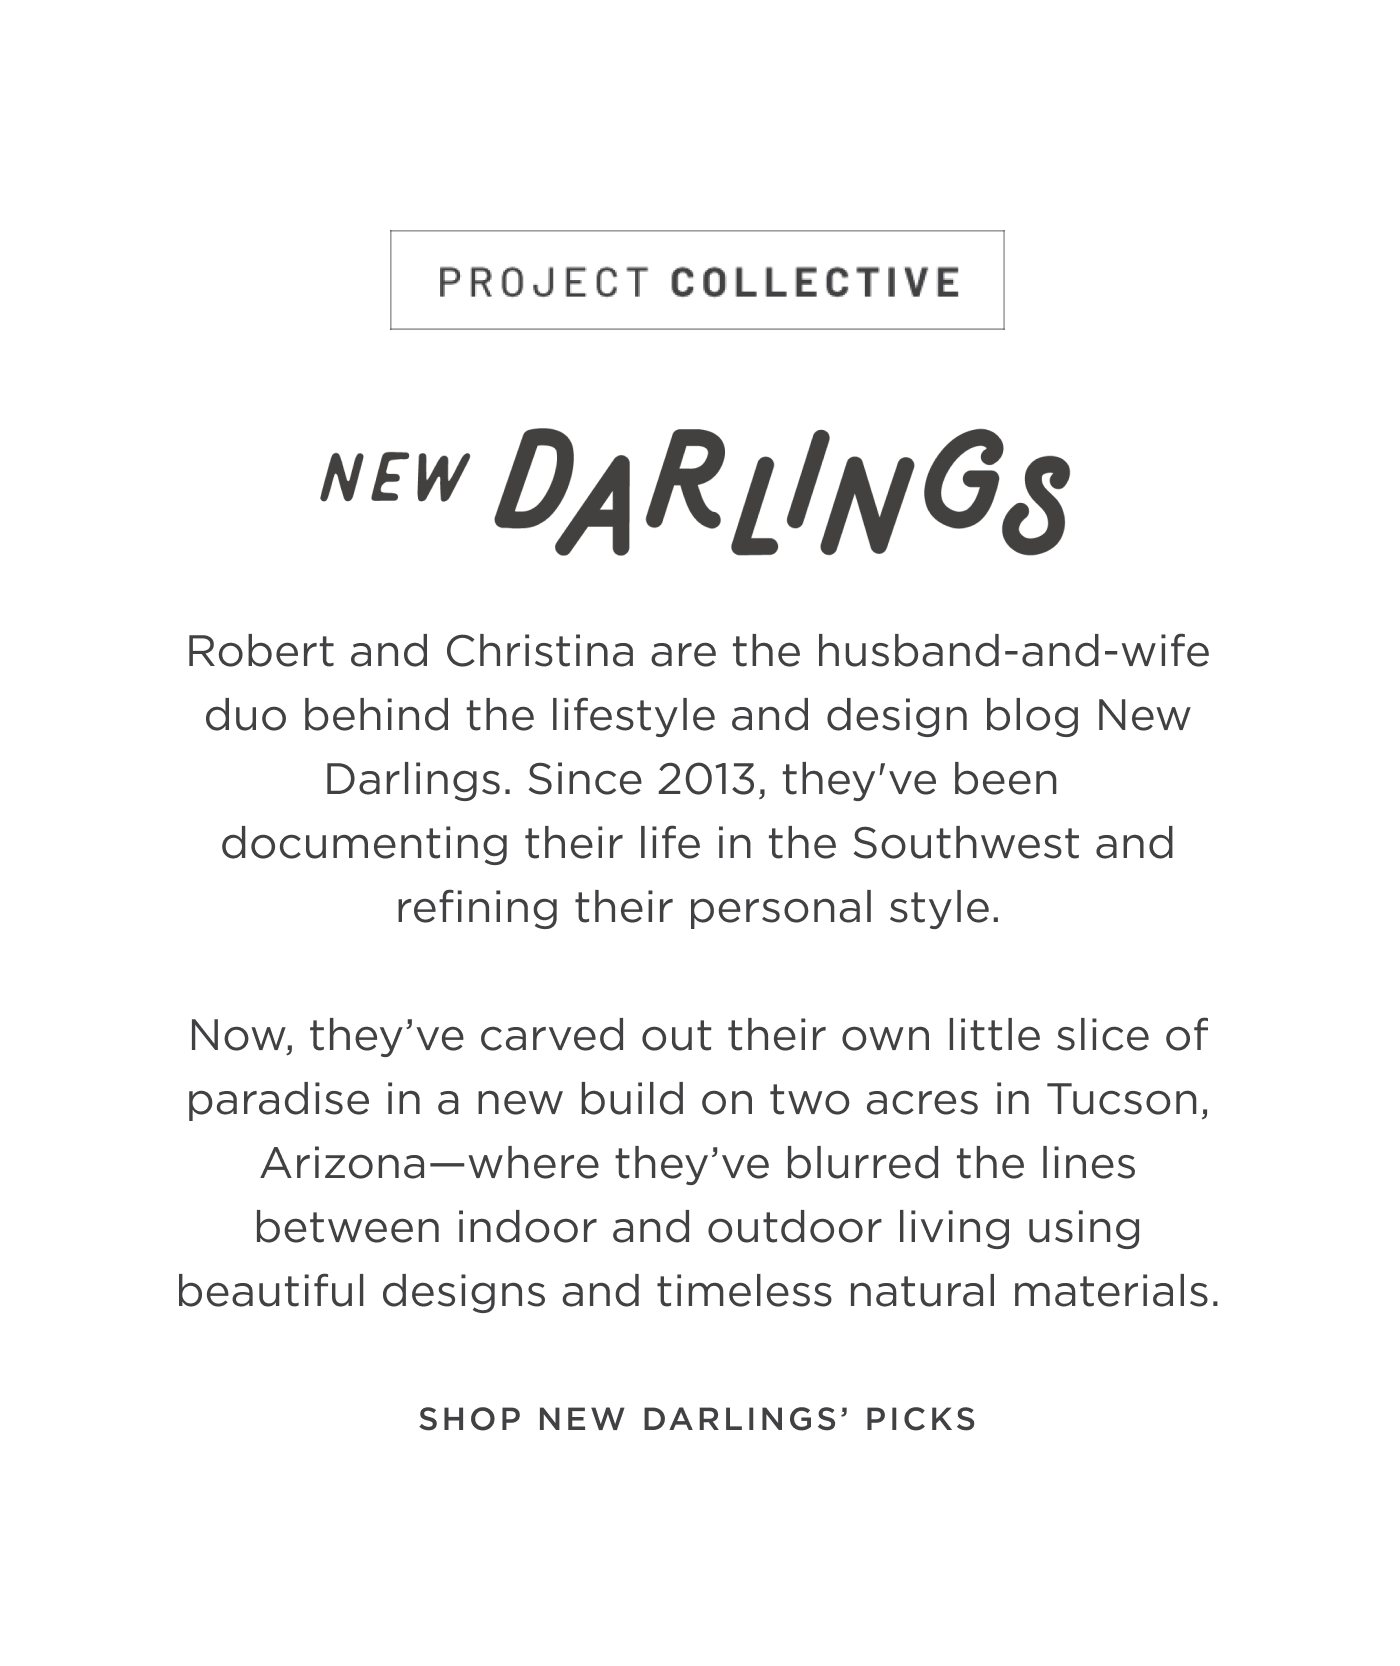 New Darlings' Picks